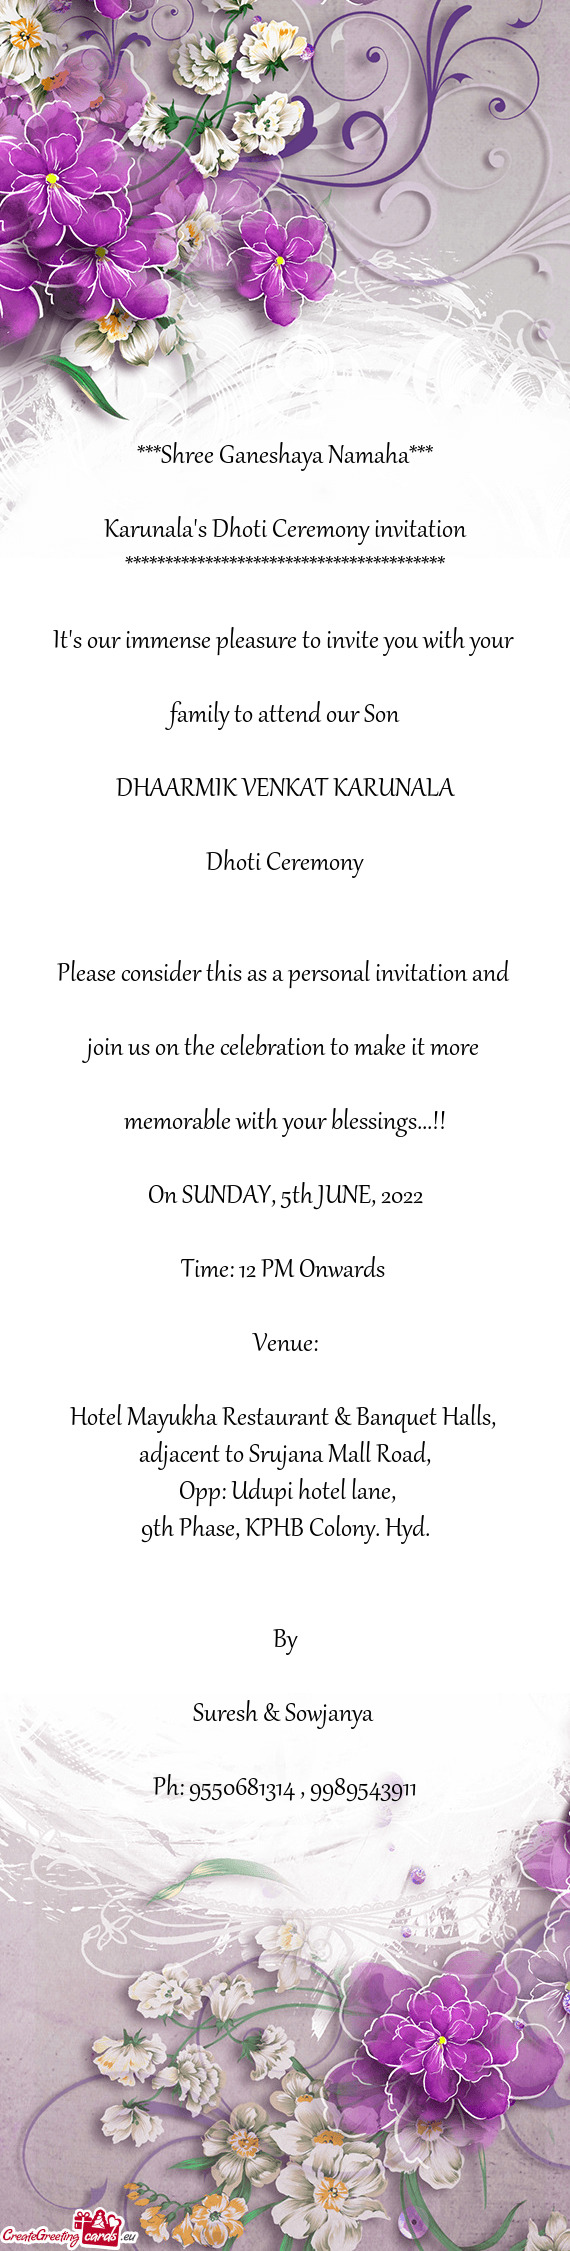 Karunala's Dhoti Ceremony invitation